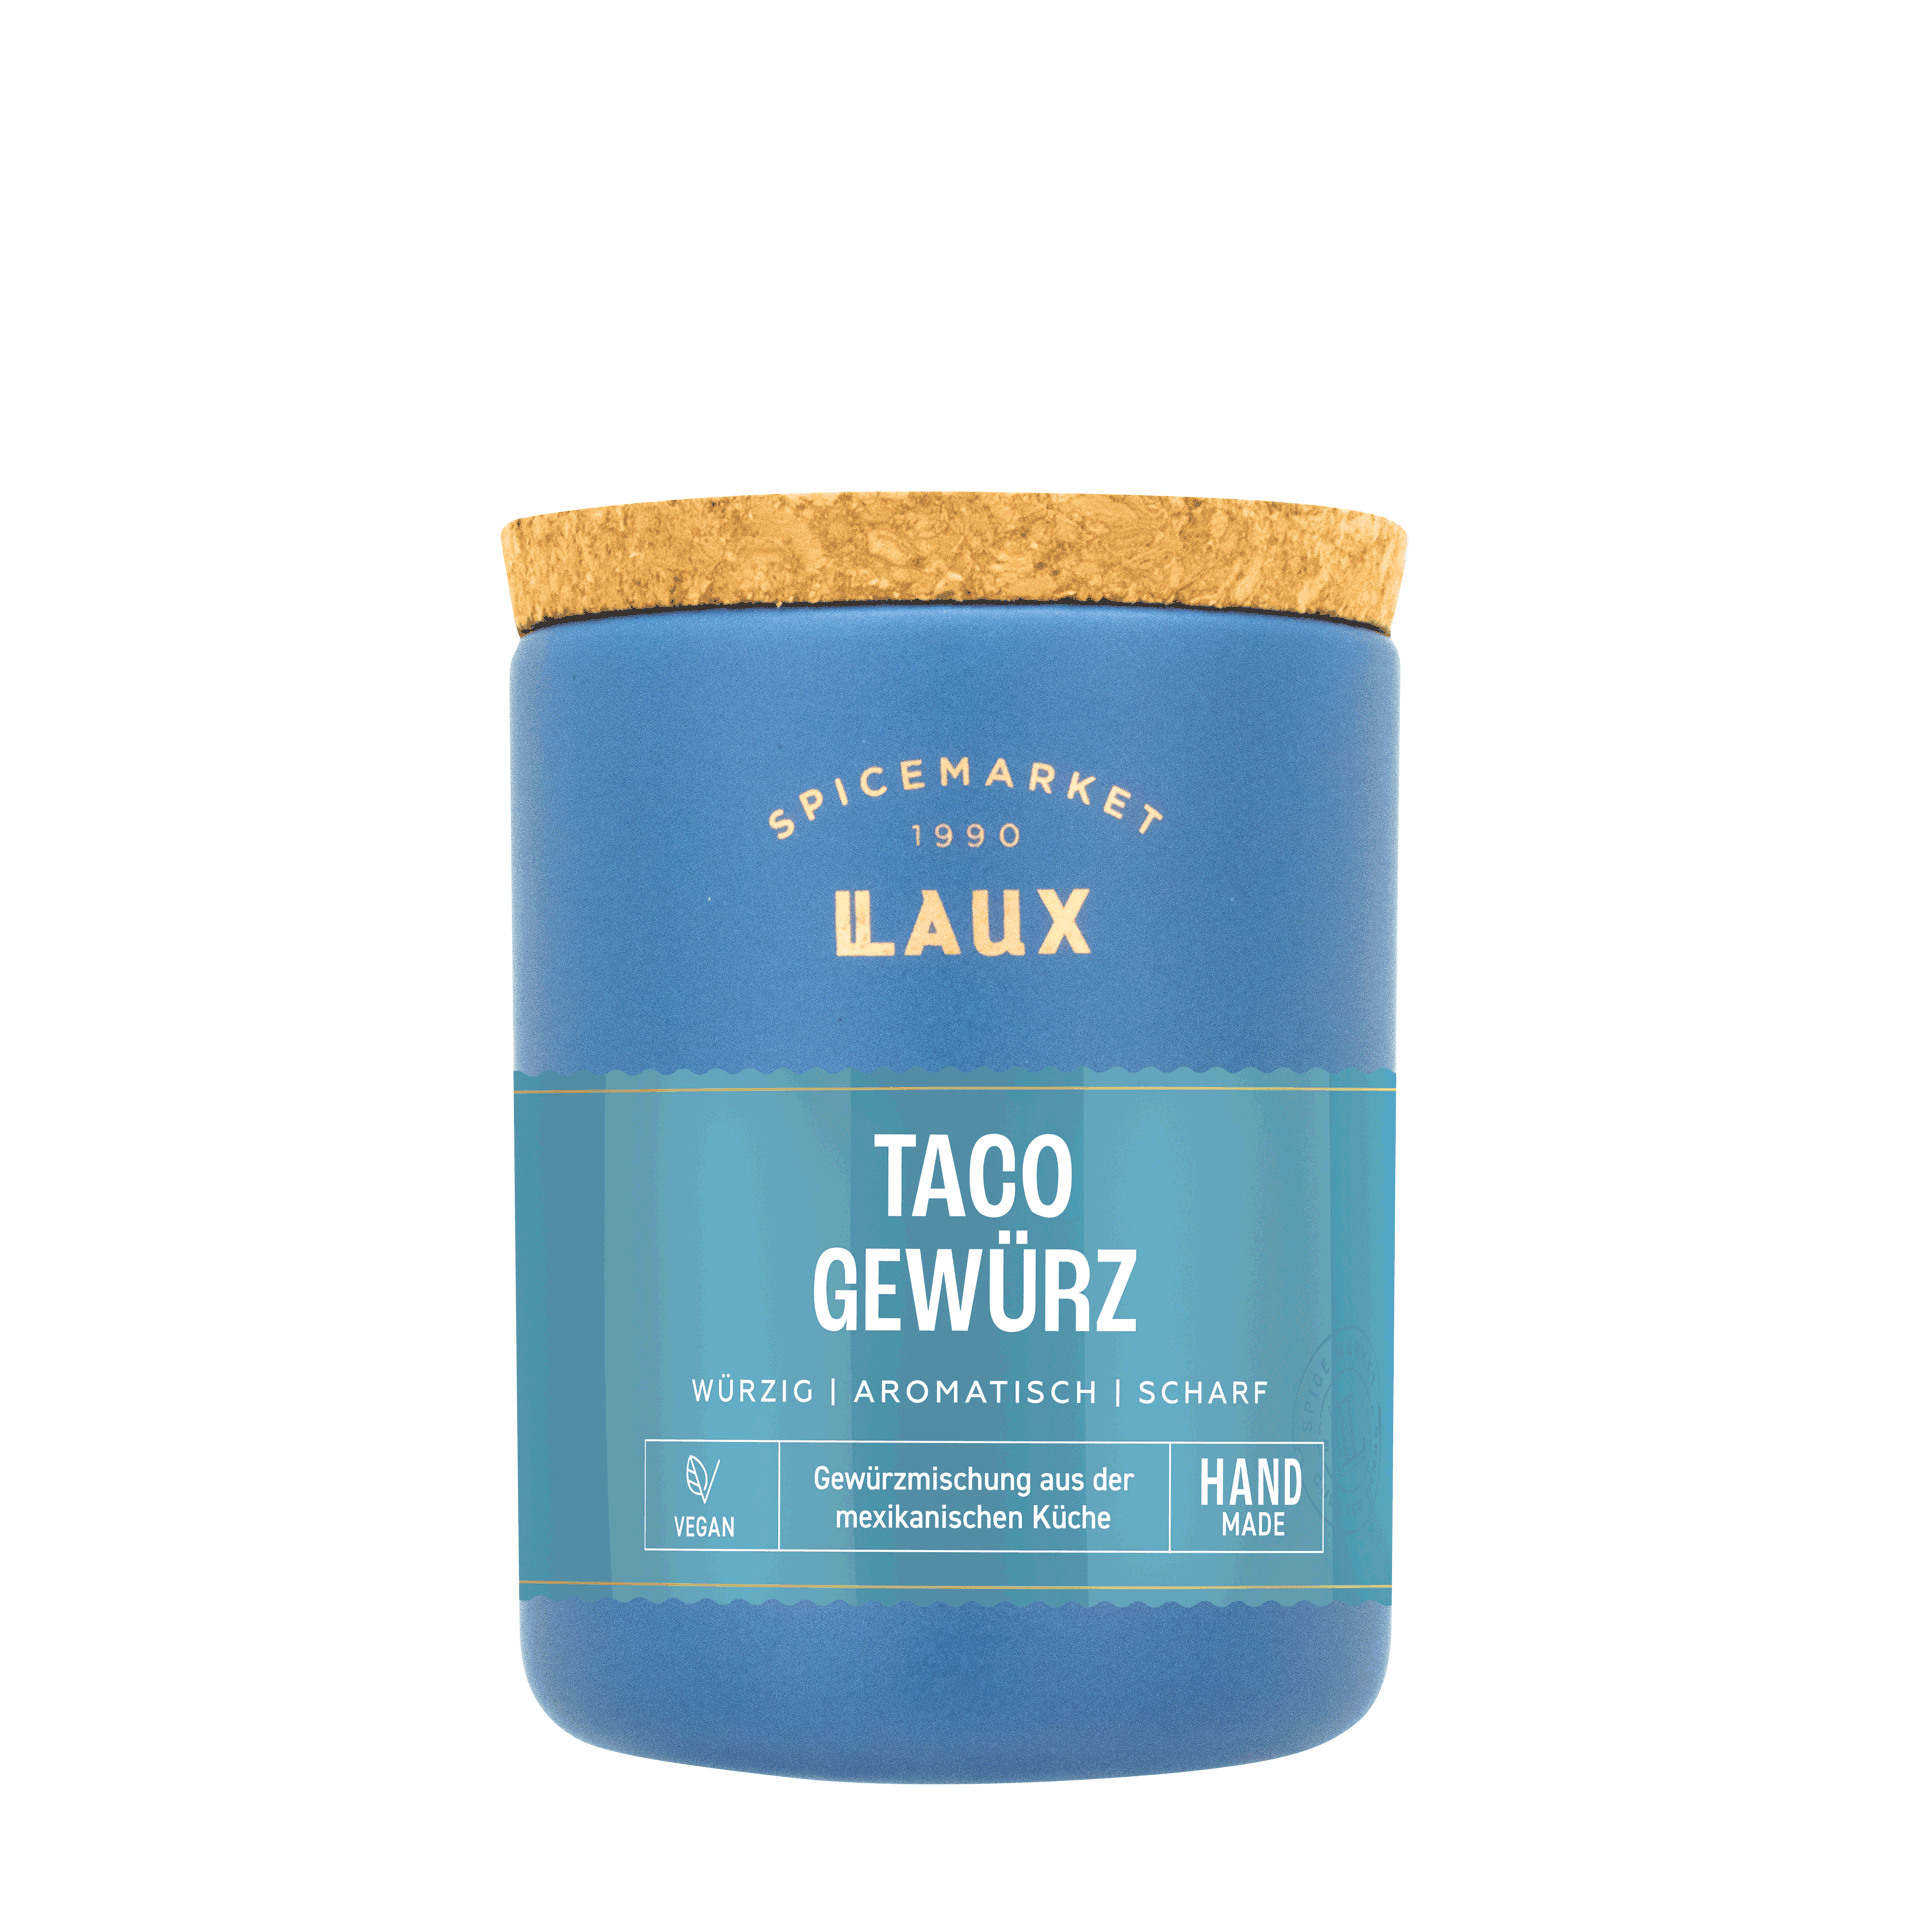 Taco Gewürz im Keramiktopf